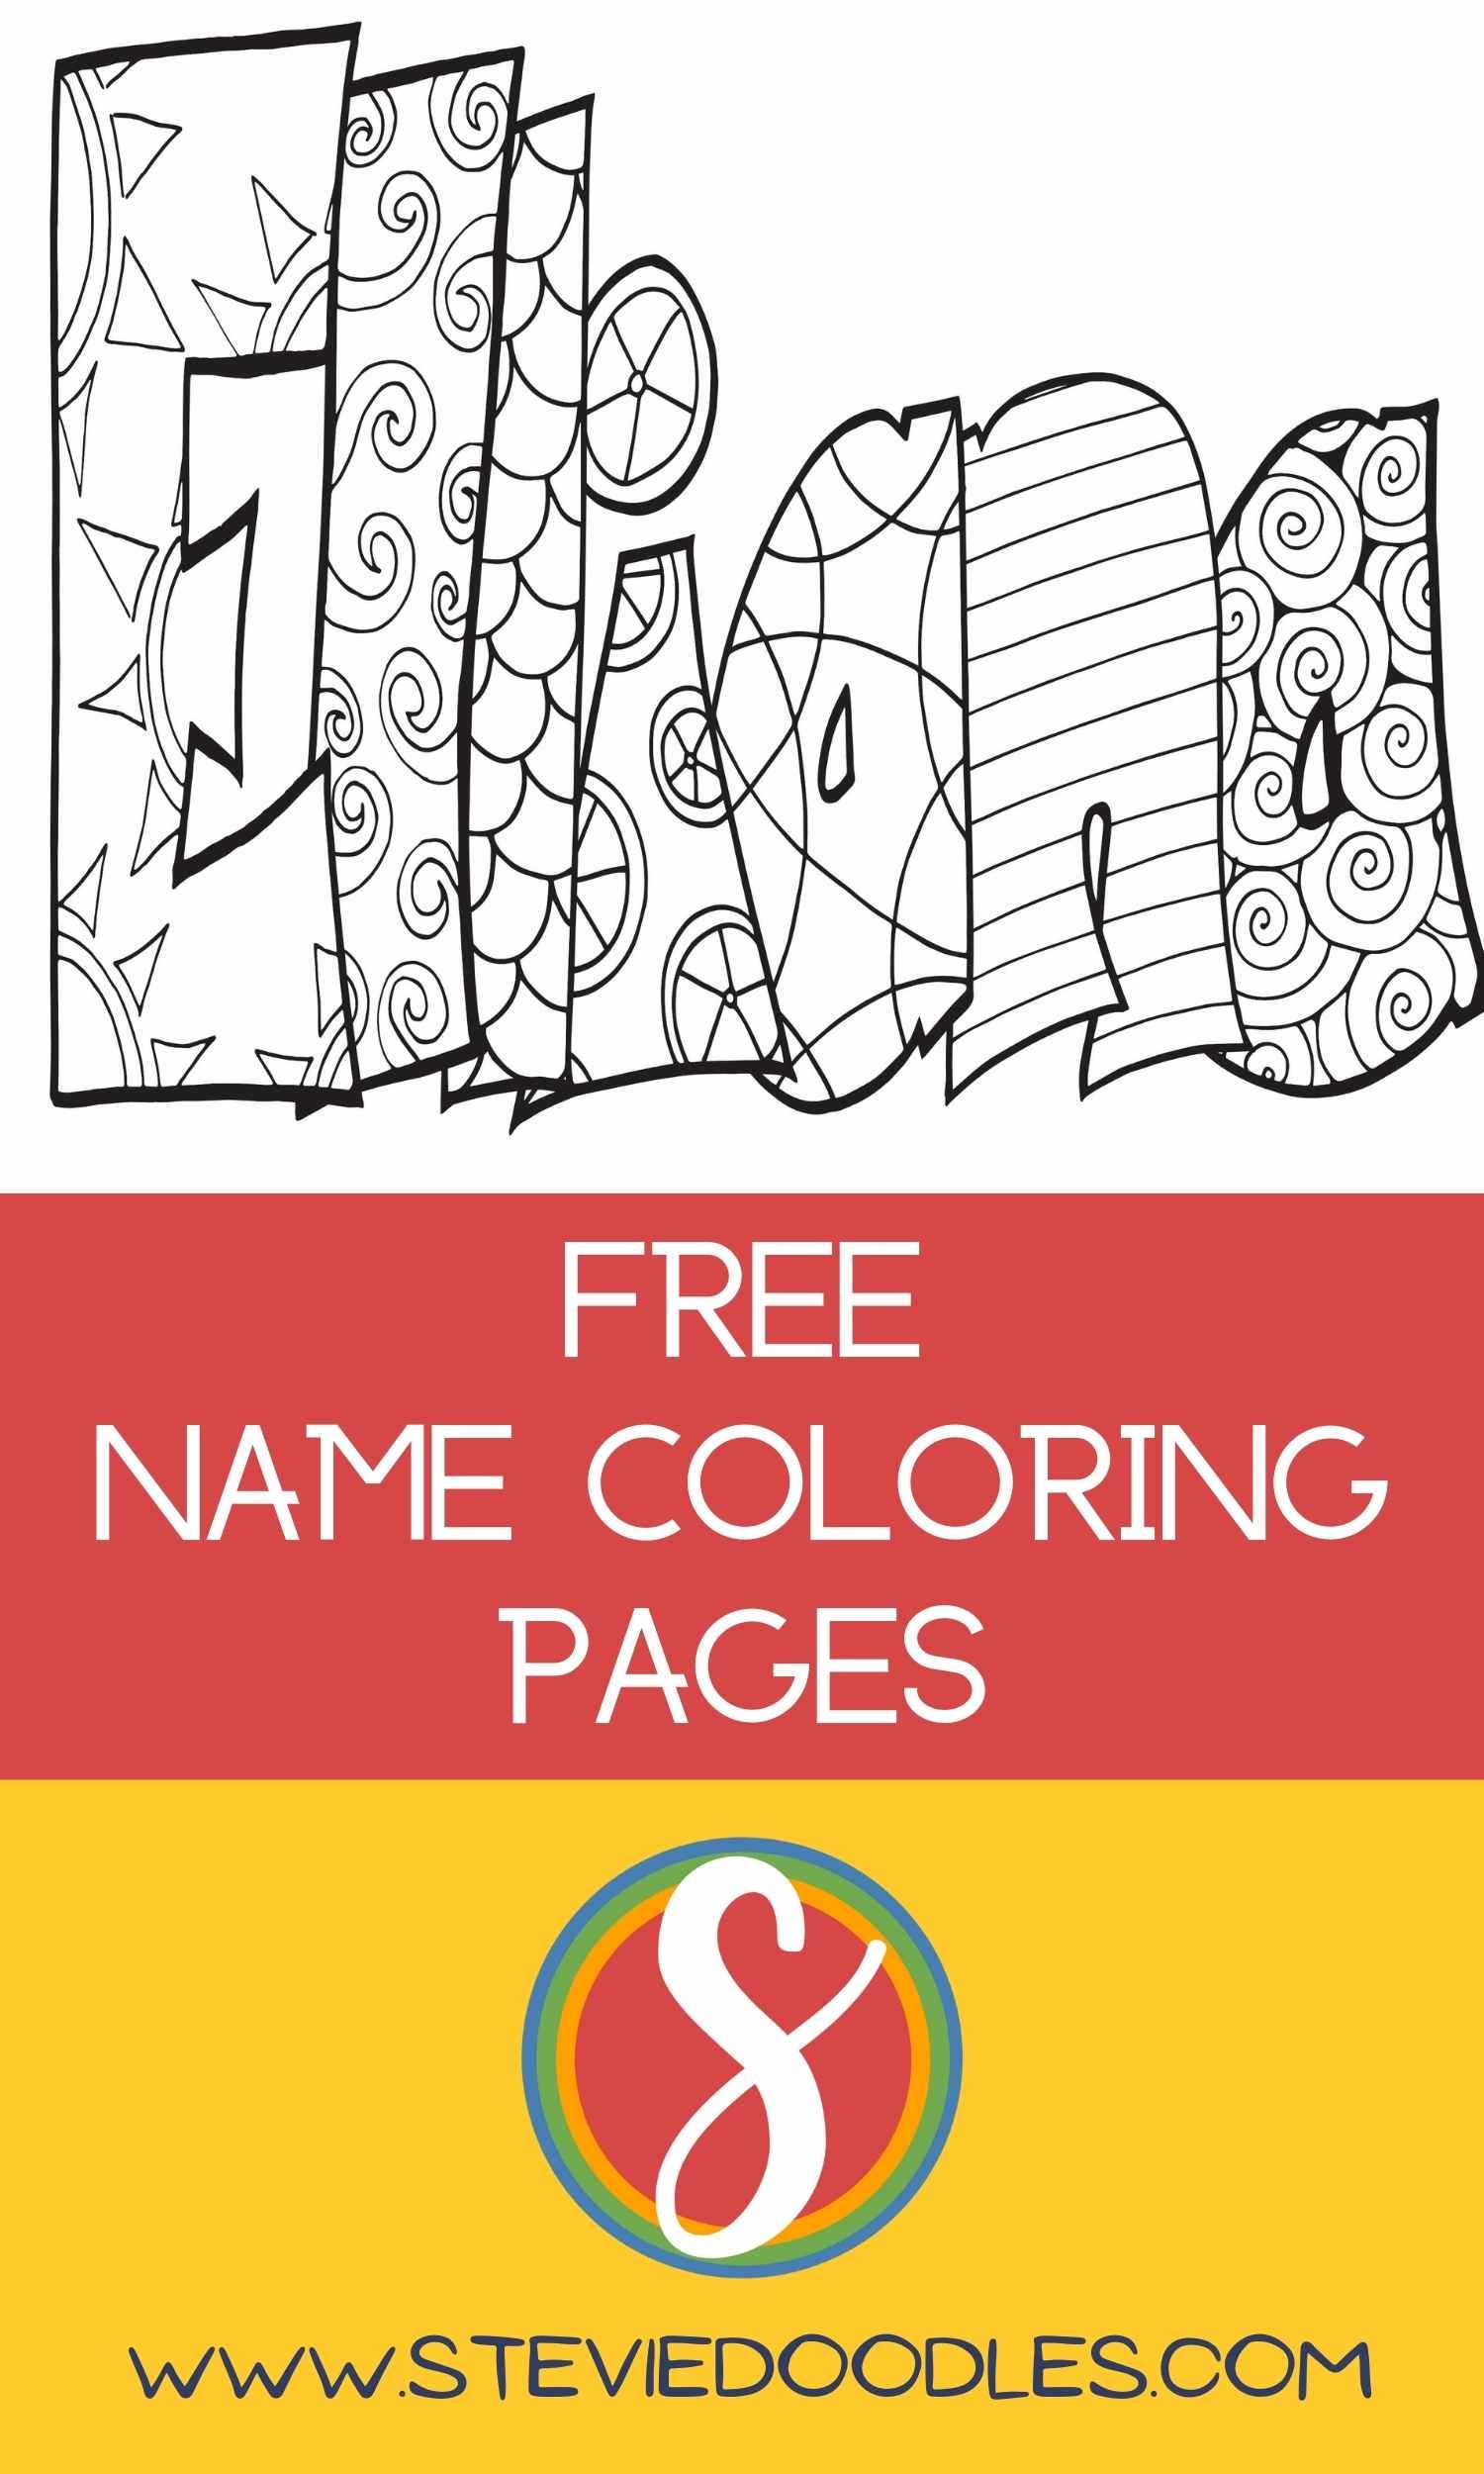 Free elliana name coloring page â stevie doodles